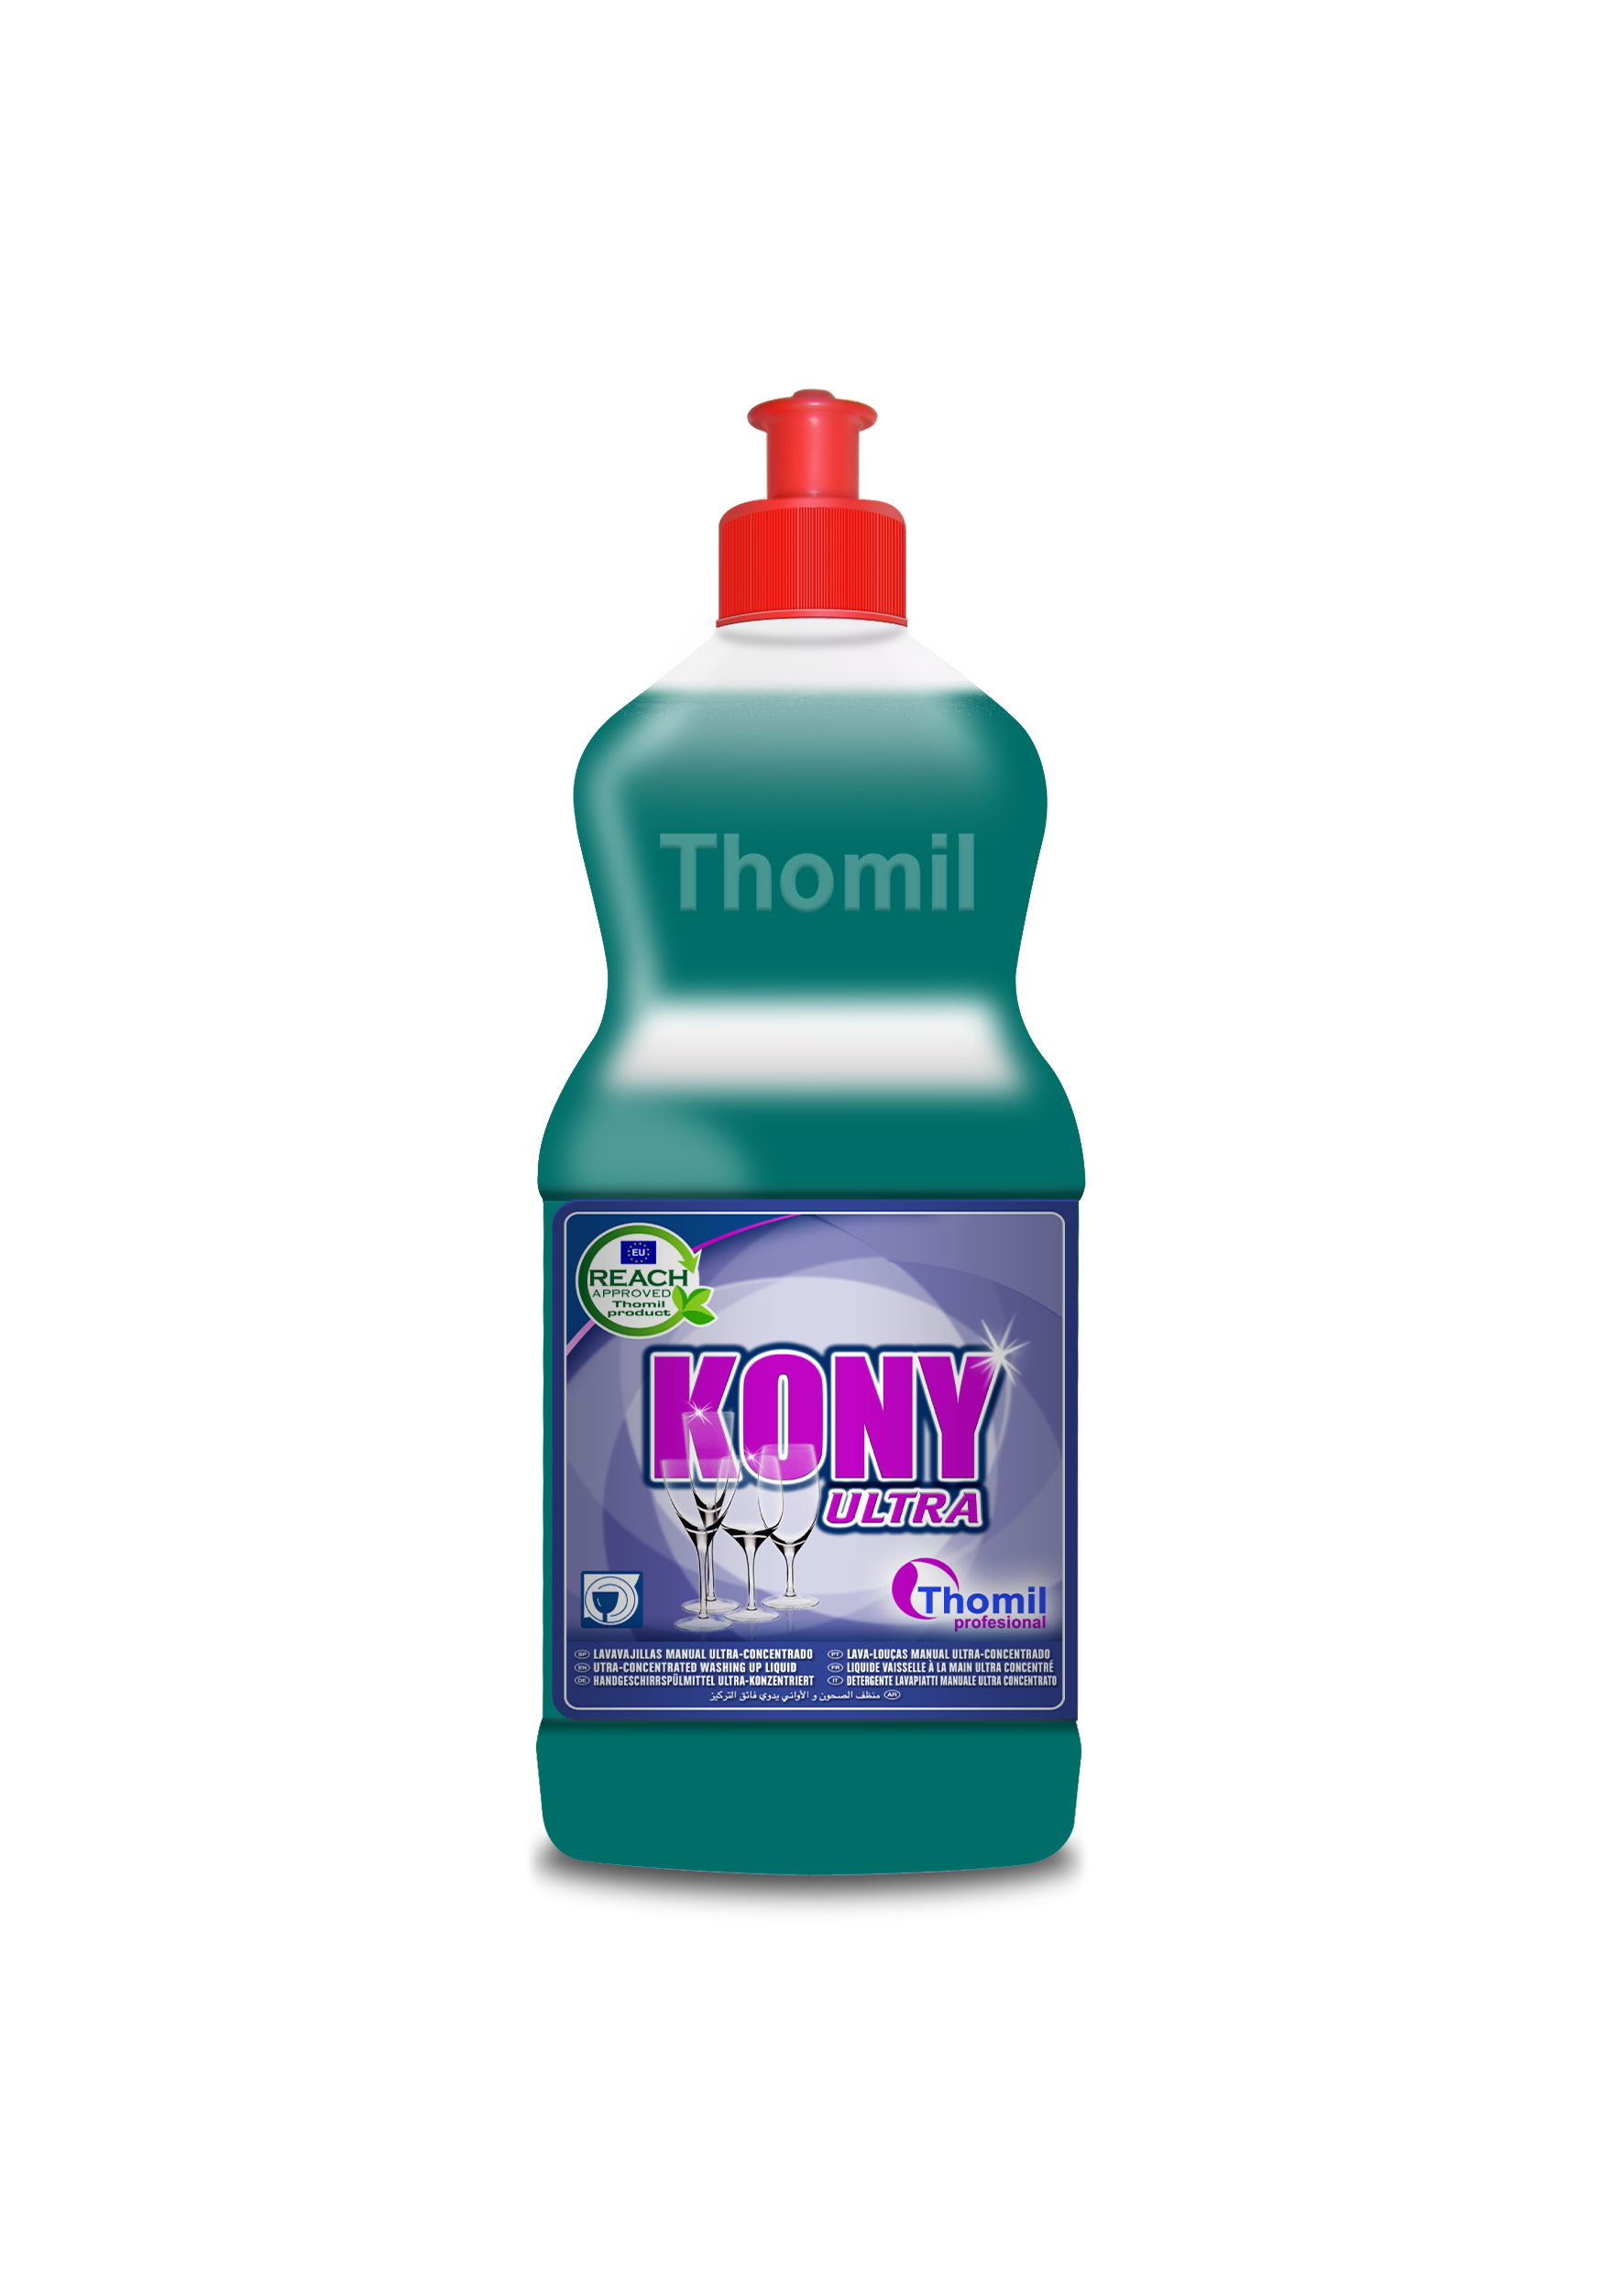 b99da738068ccbbbb96299e6b7268739_thomil-kony-ultra-18x750ml-washing-up-liquid